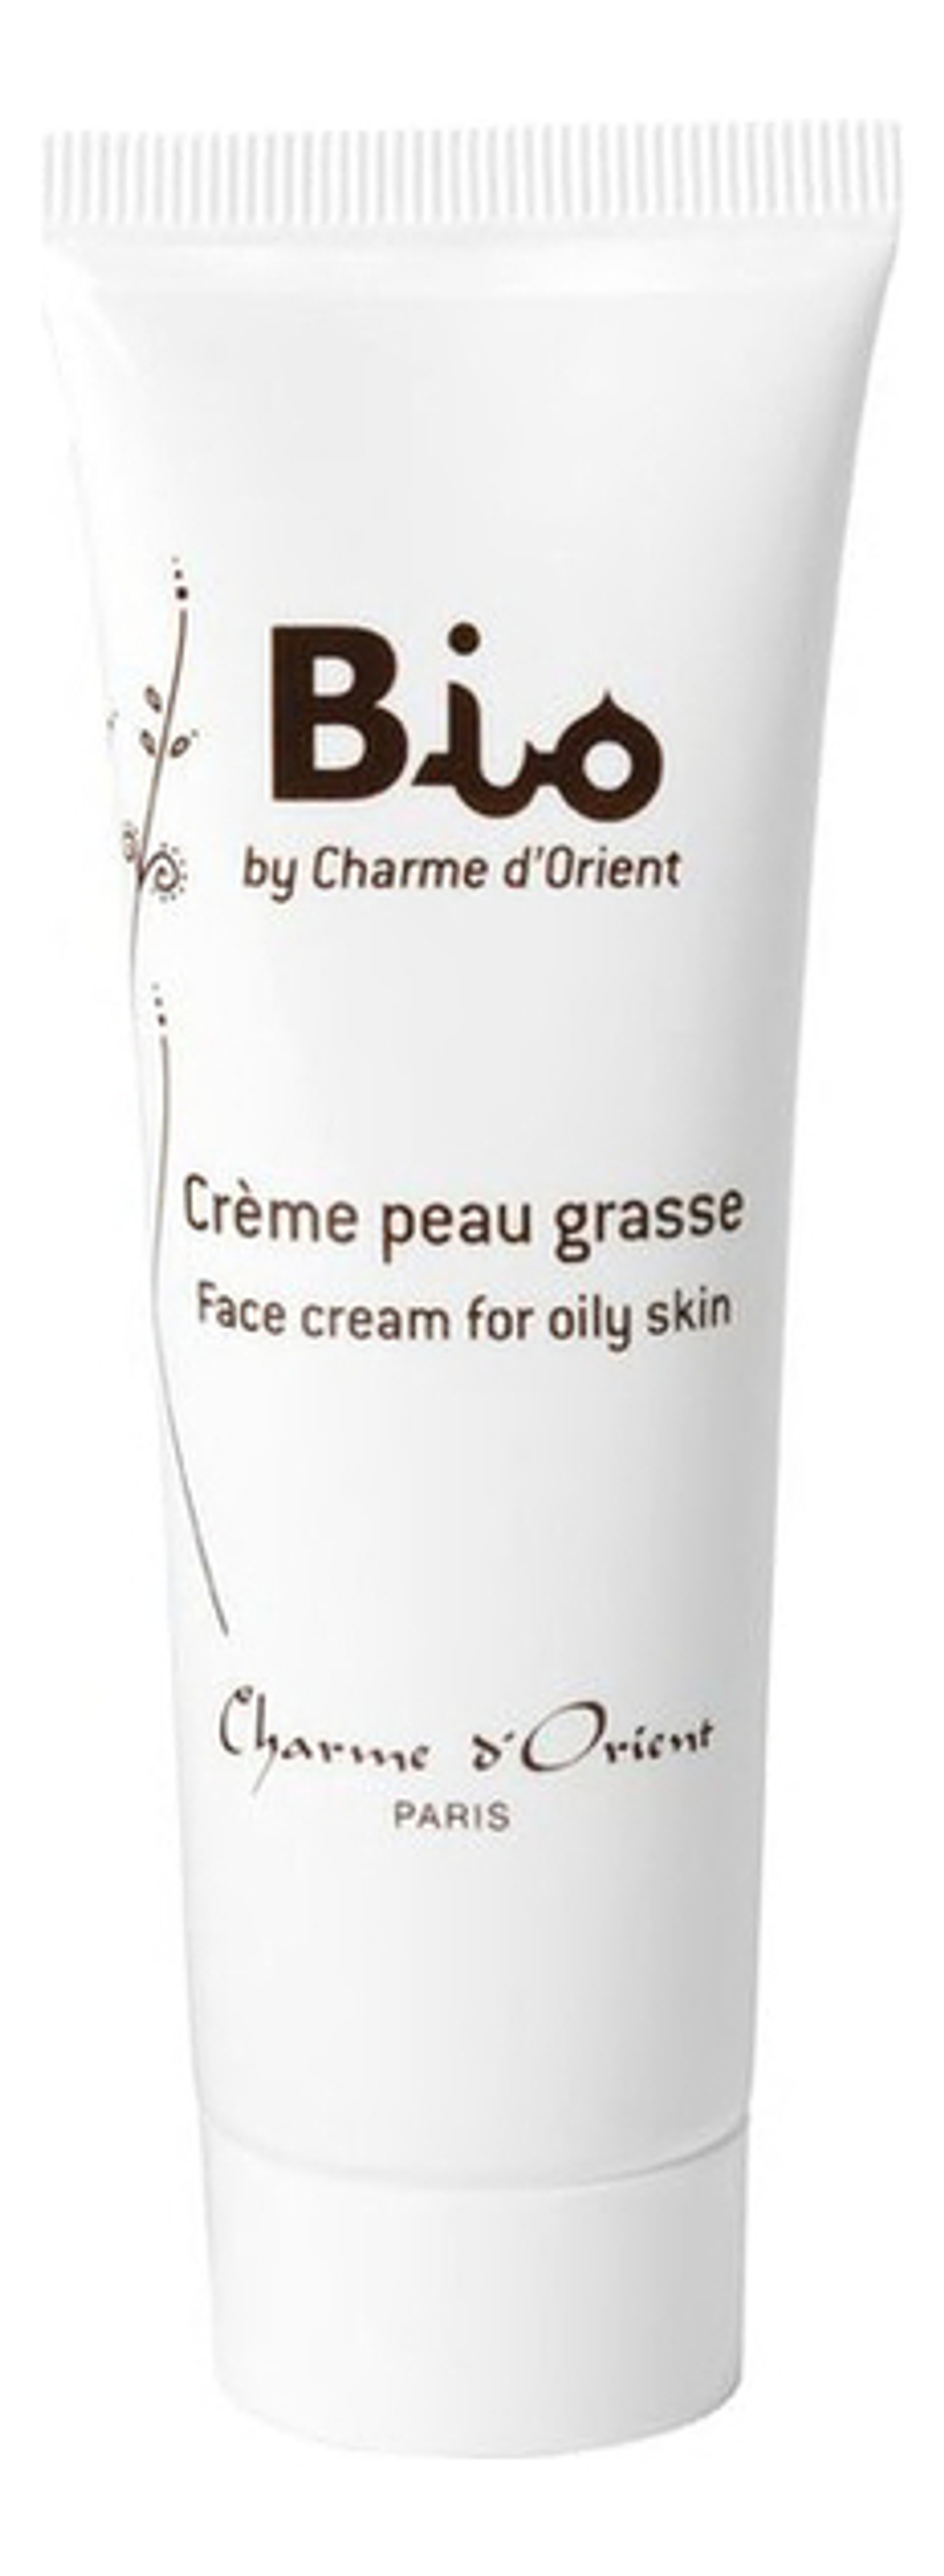 CHARME D'ORIENT BIO1477 Крем для лица для жирной кожи (линия Bio) Bio by Charme d’Orient – Crème peau grasse/Face cream for oily skin (Шарм ди Ориент) 50 мл